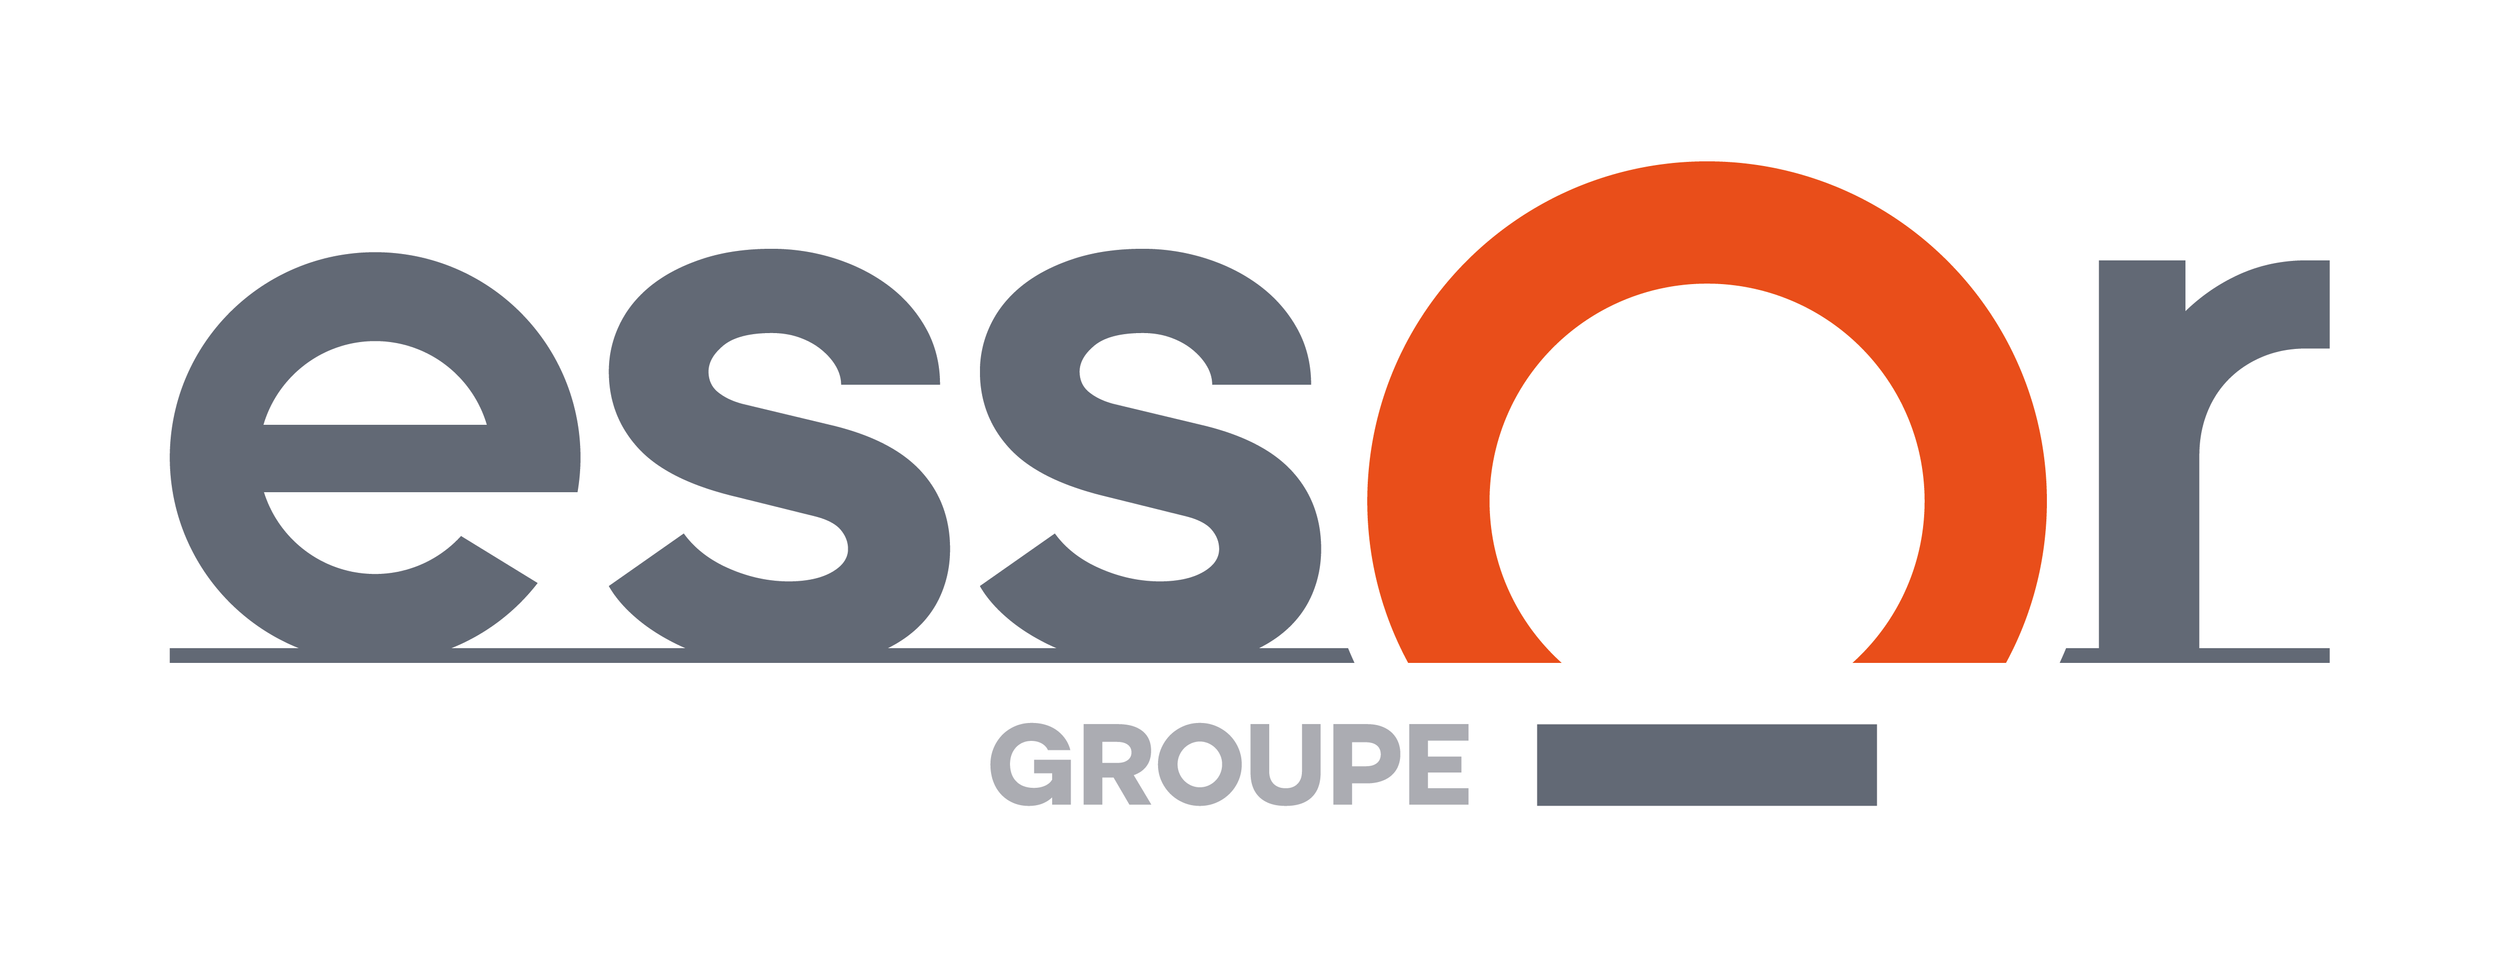 Essor-Logo Gris-Orange.png